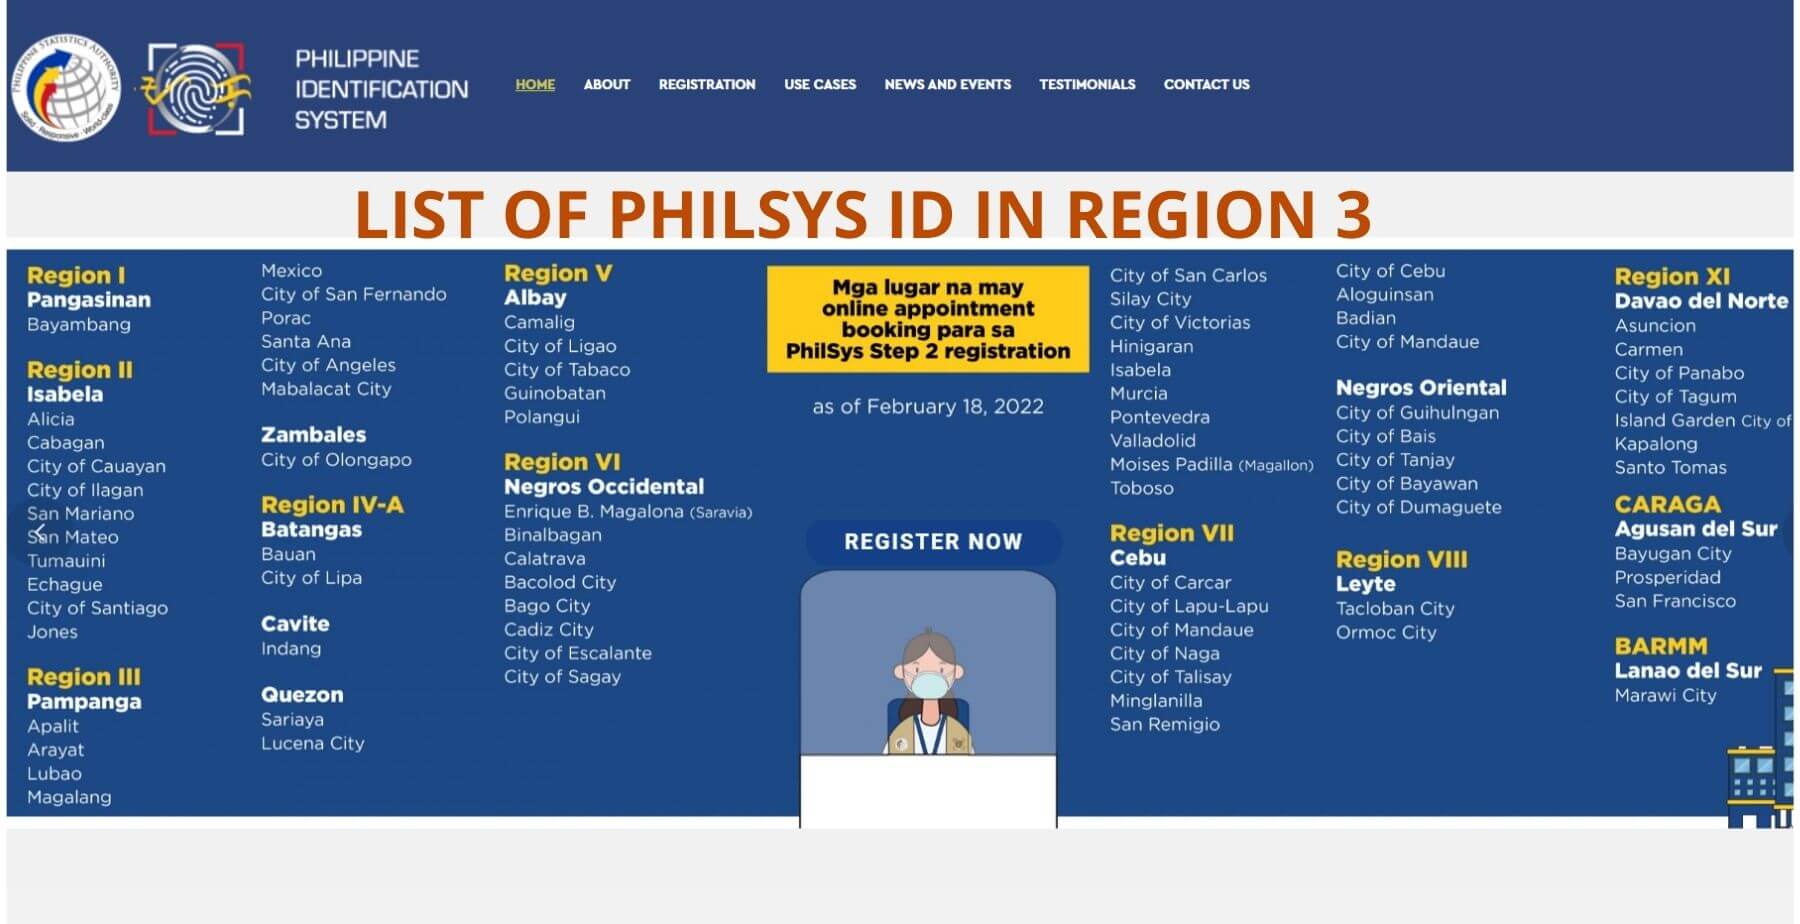 LIST OF PHILSYS ID IN REGION 3